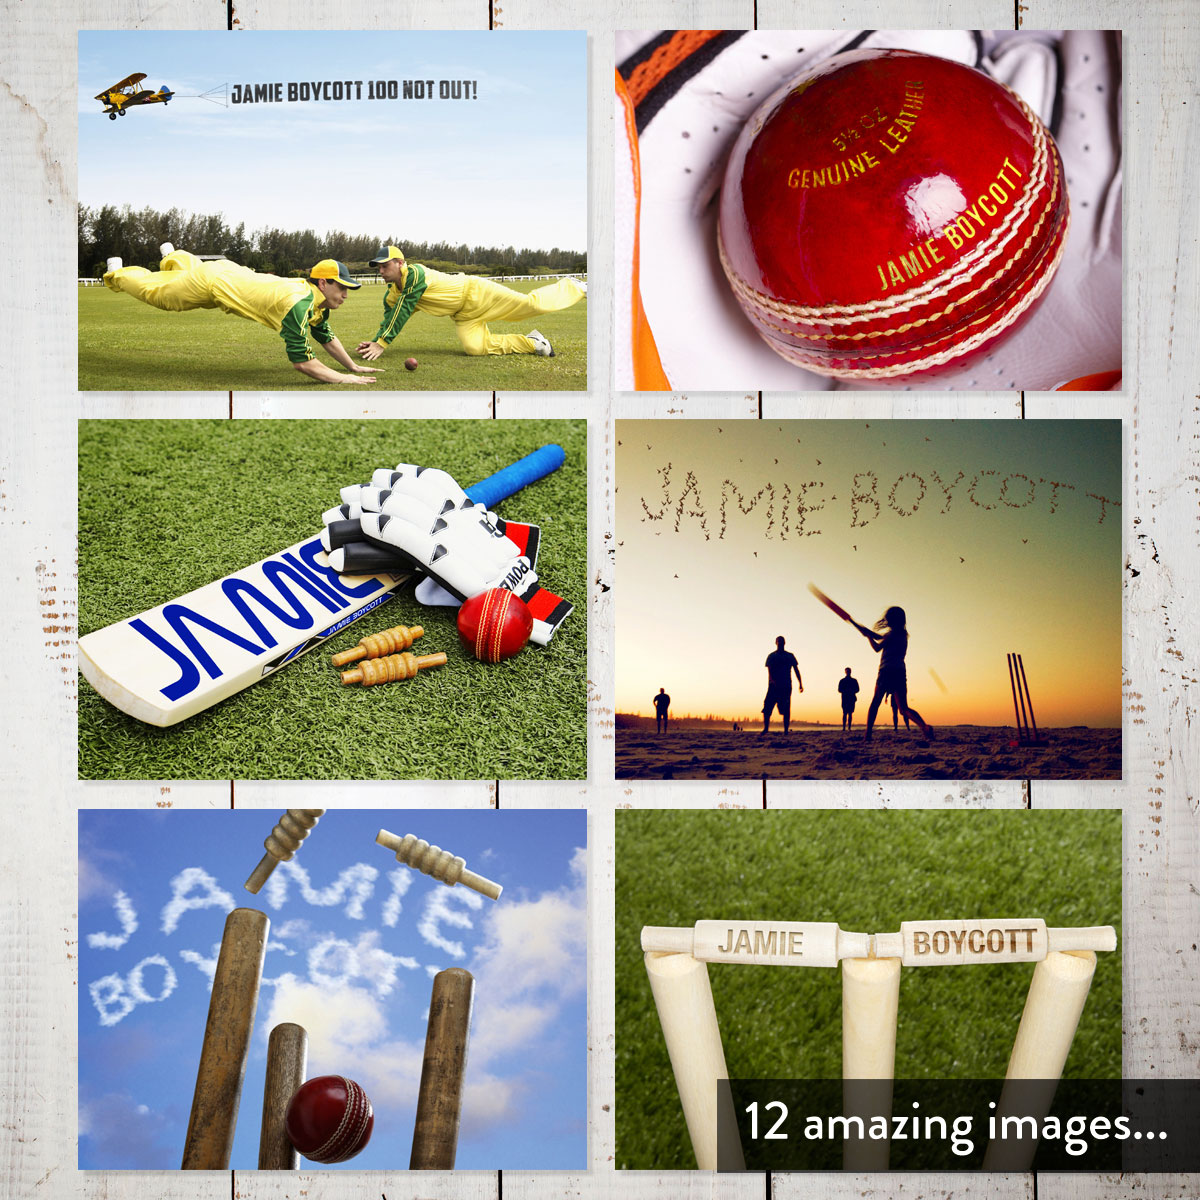 Personalised Cricket Calendar - New Edition